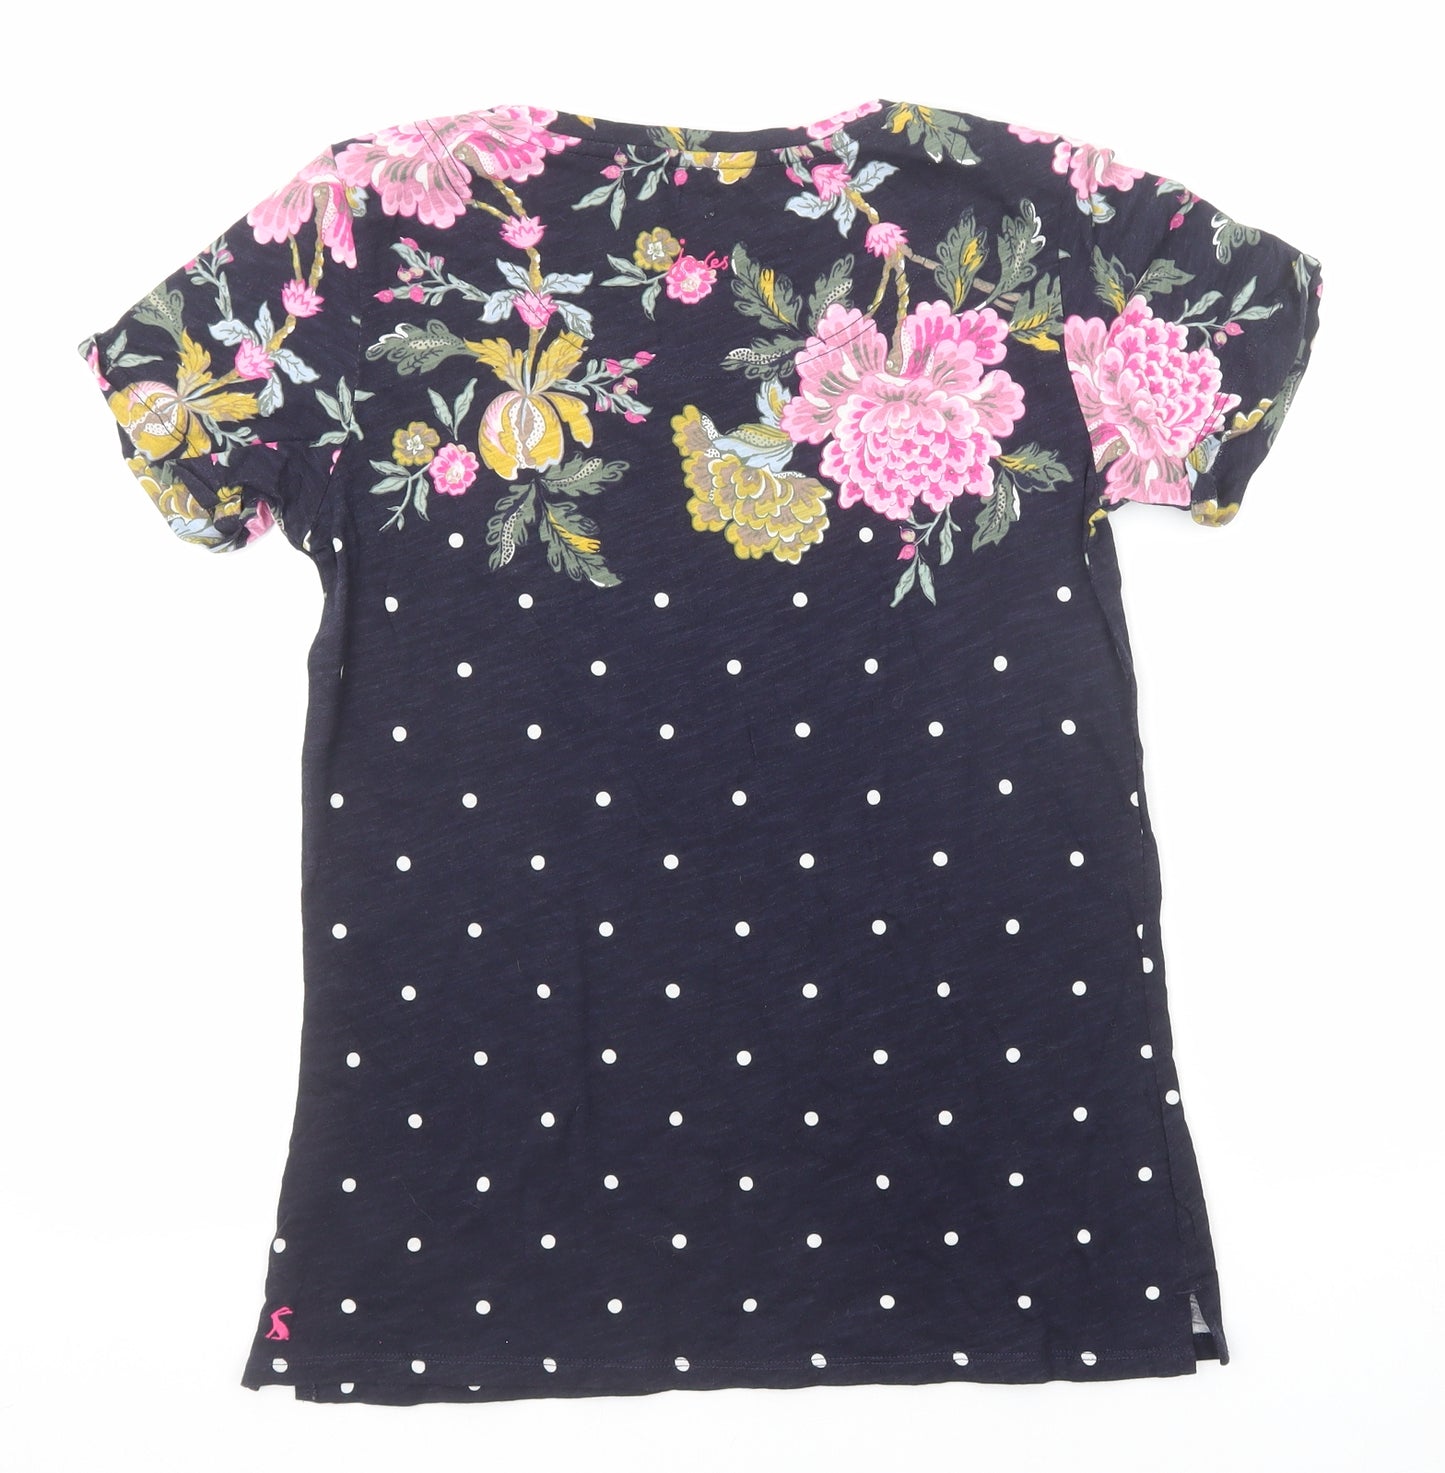 Joules Womens Black Floral Cotton Basic T-Shirt Size 10 Round Neck